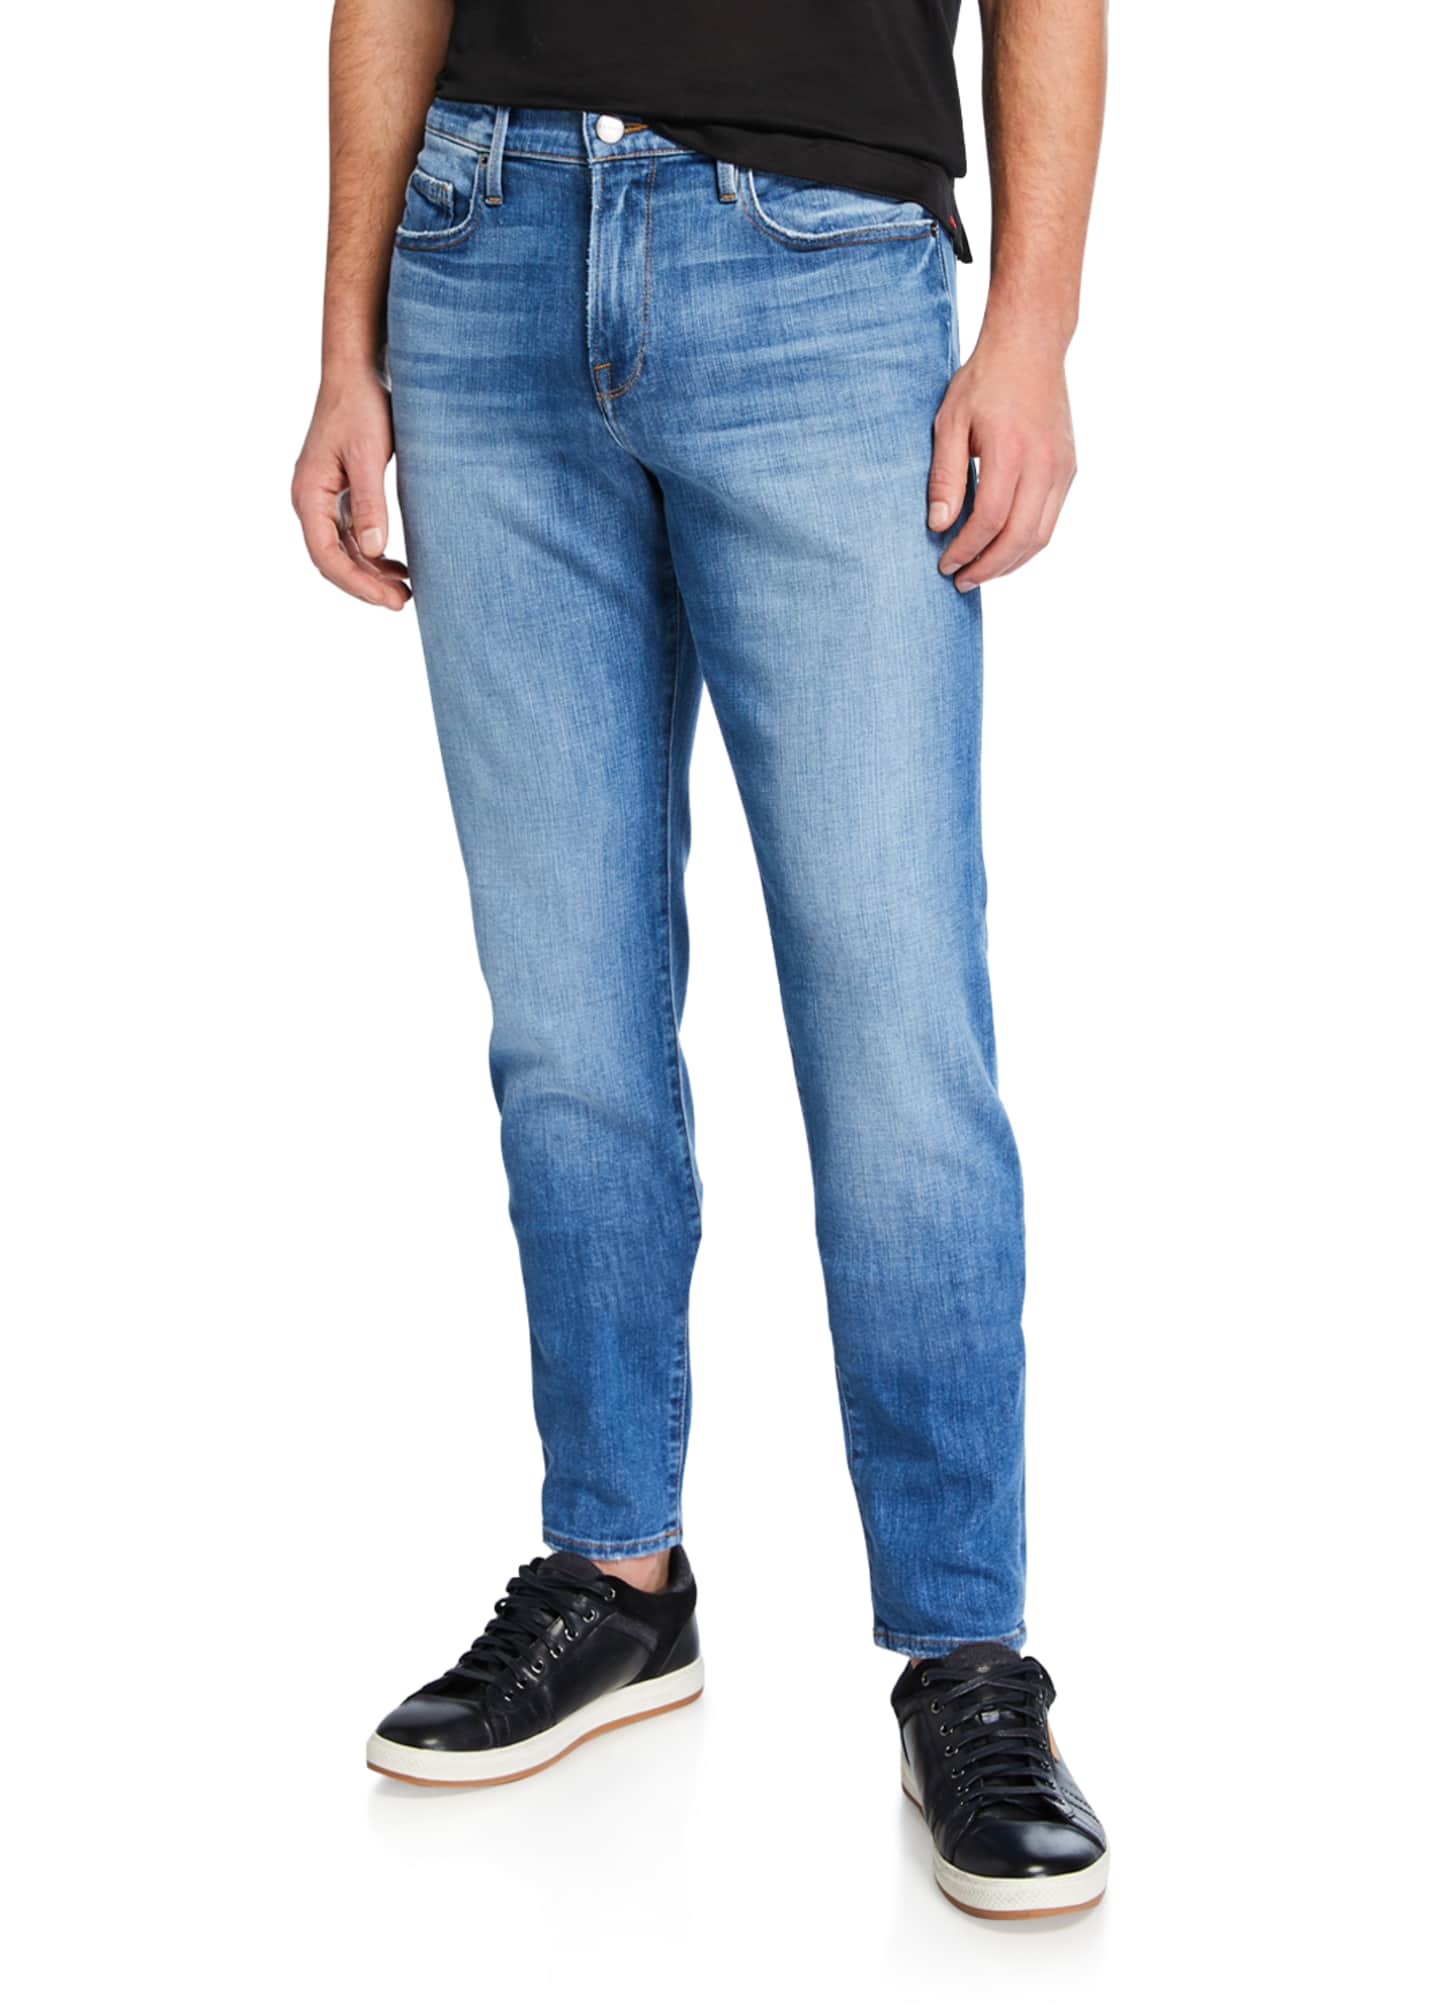 Men's Jeans : Skinny, Distressed & Stretch at Bergdorf Goodman